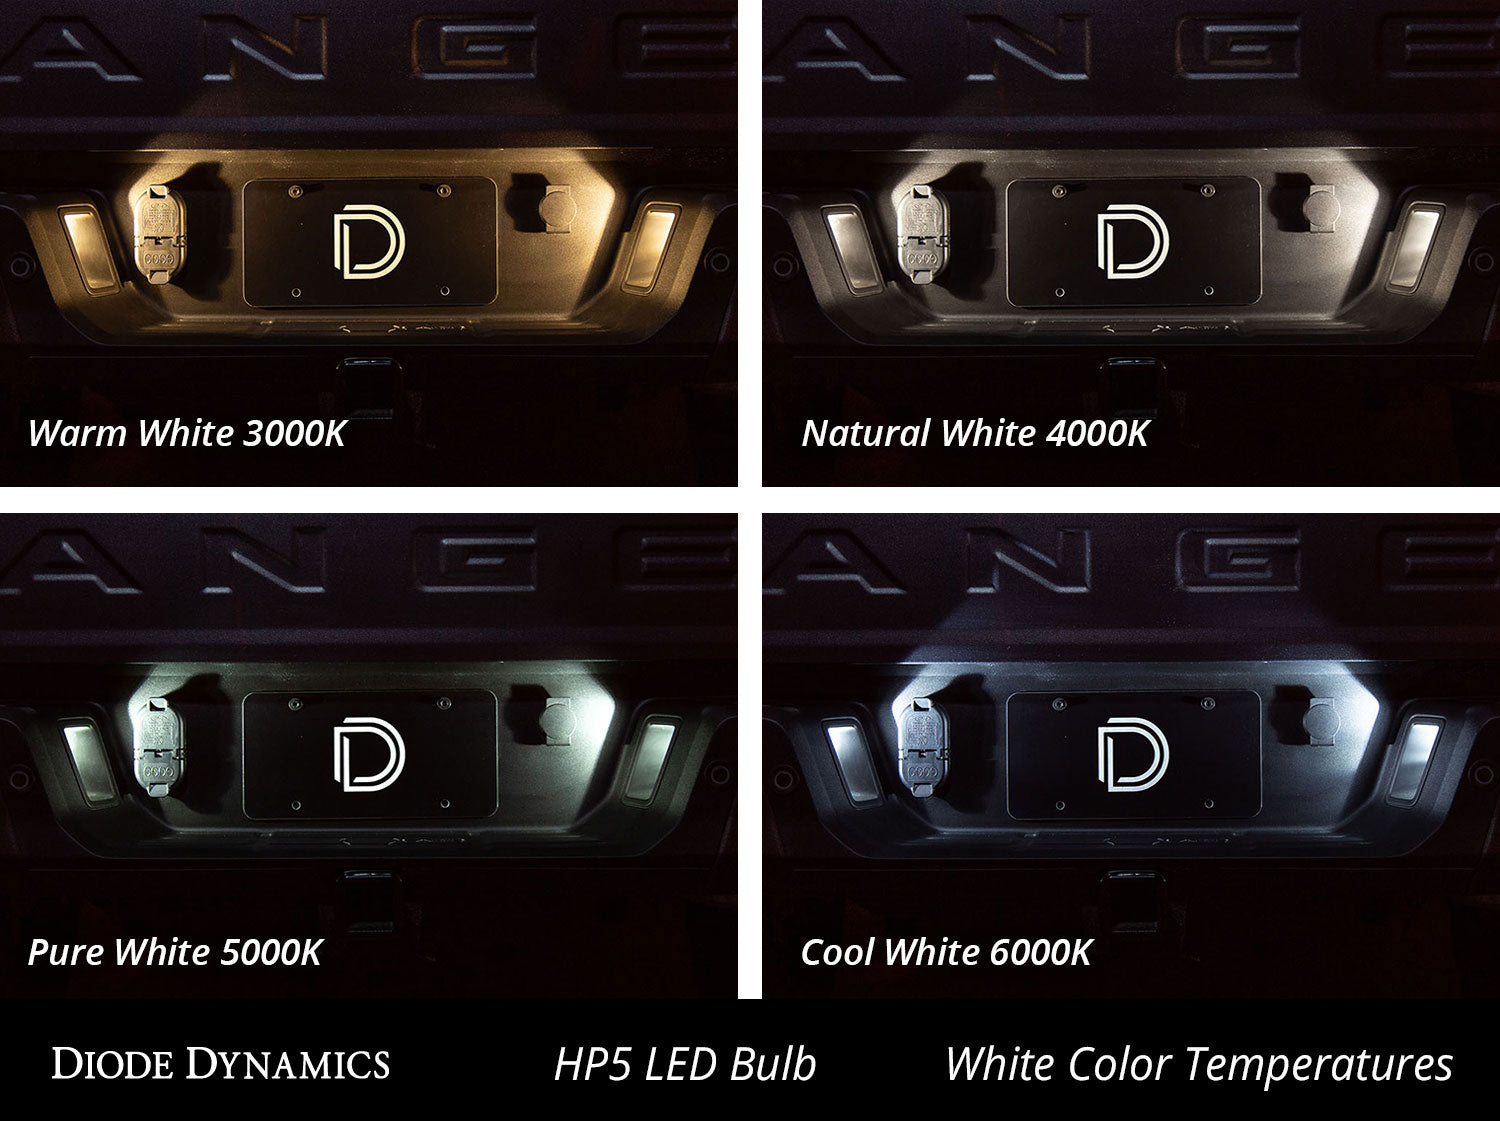 Cool White 194 LED Bulb HP5 Diode Dynamics-